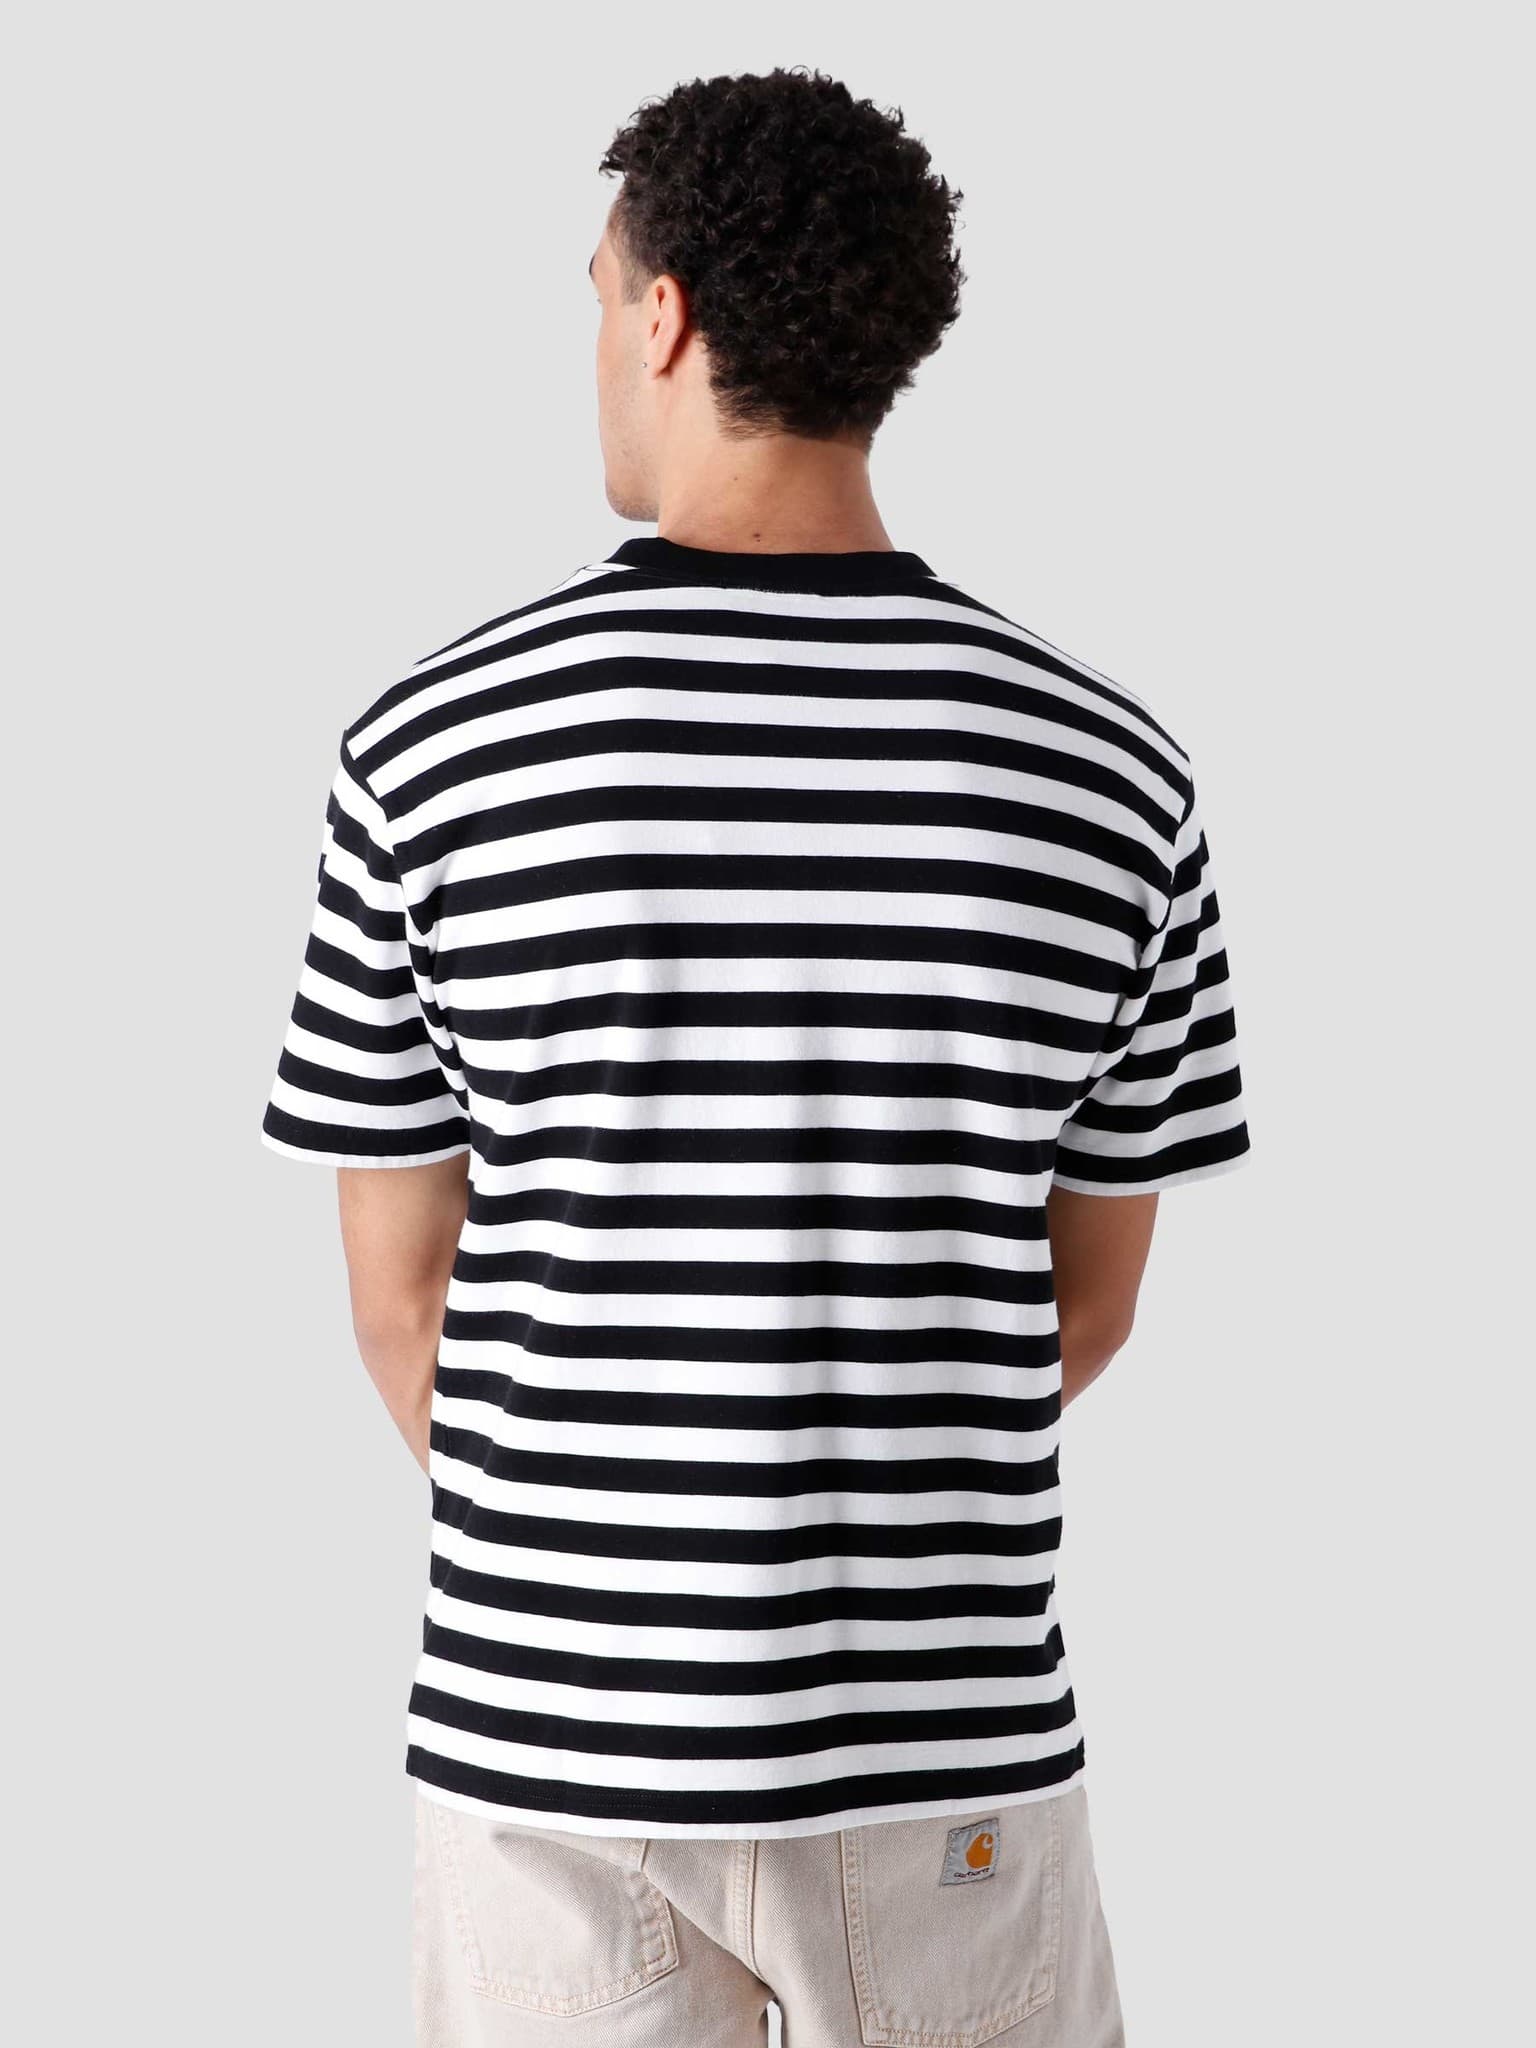 Olaf Stripe Sans T-Shirt White Black NOS_0003